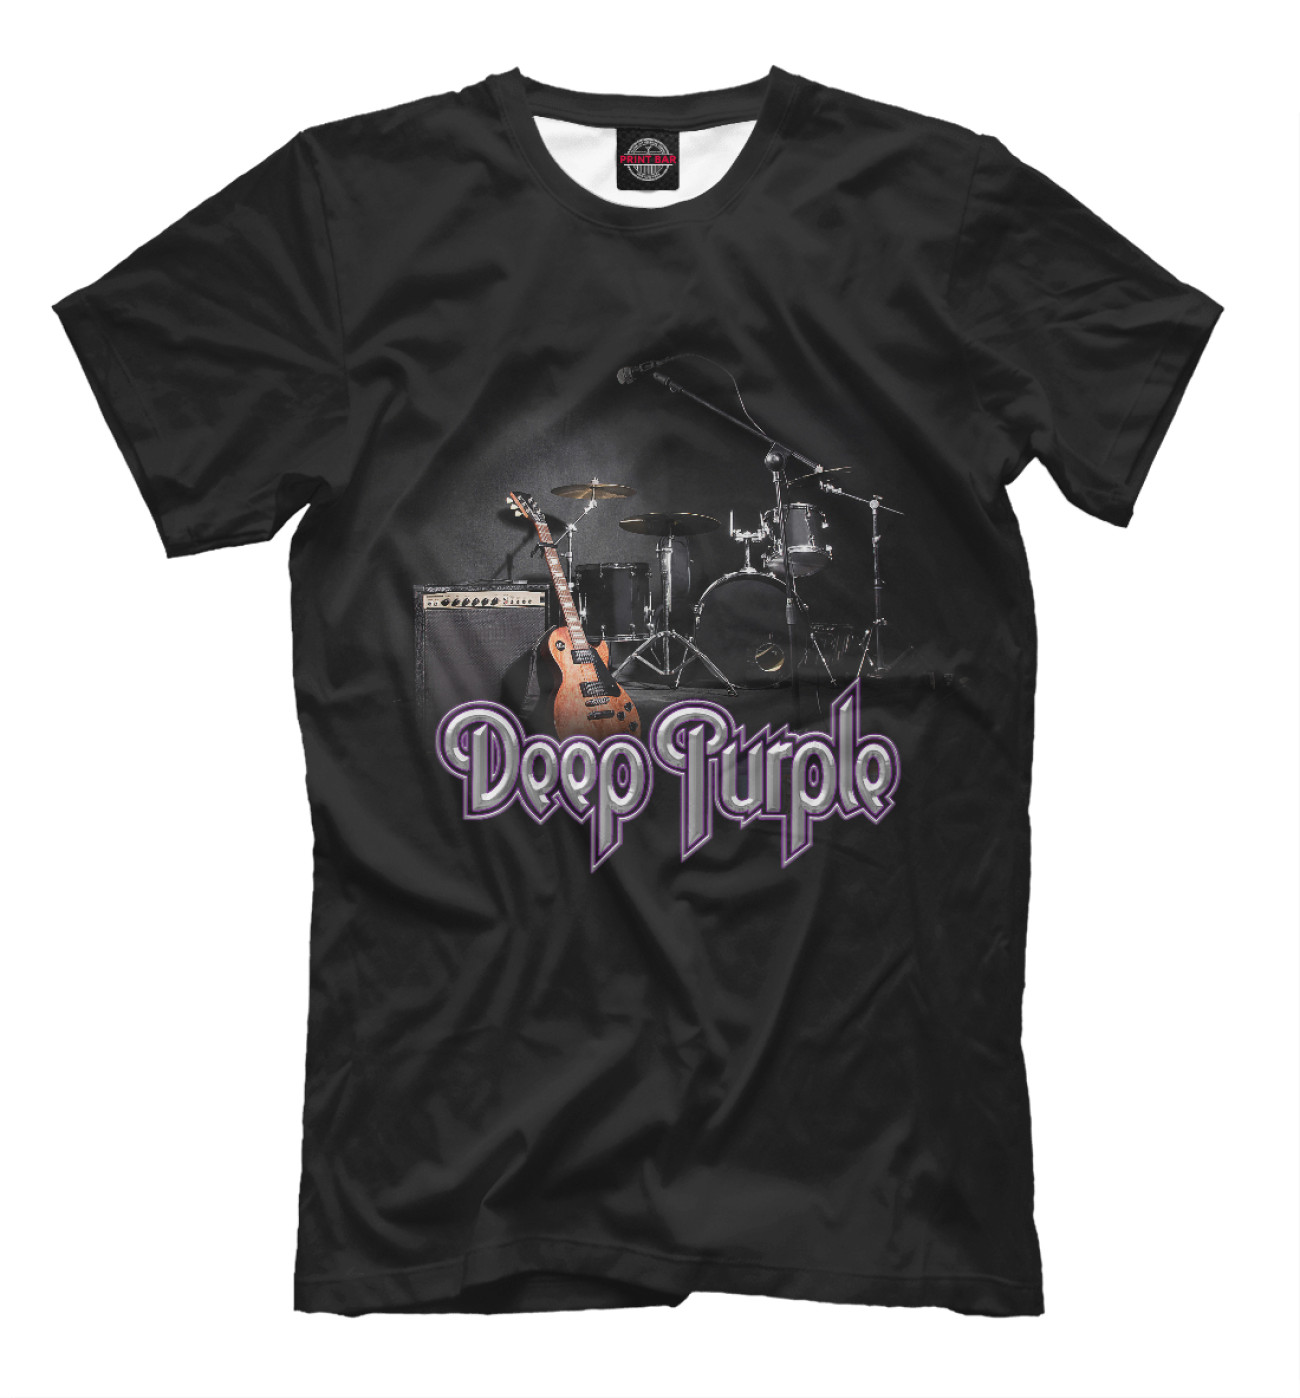 Мужская Футболка Deep Purple, артикул: PUR-595801-fut-2